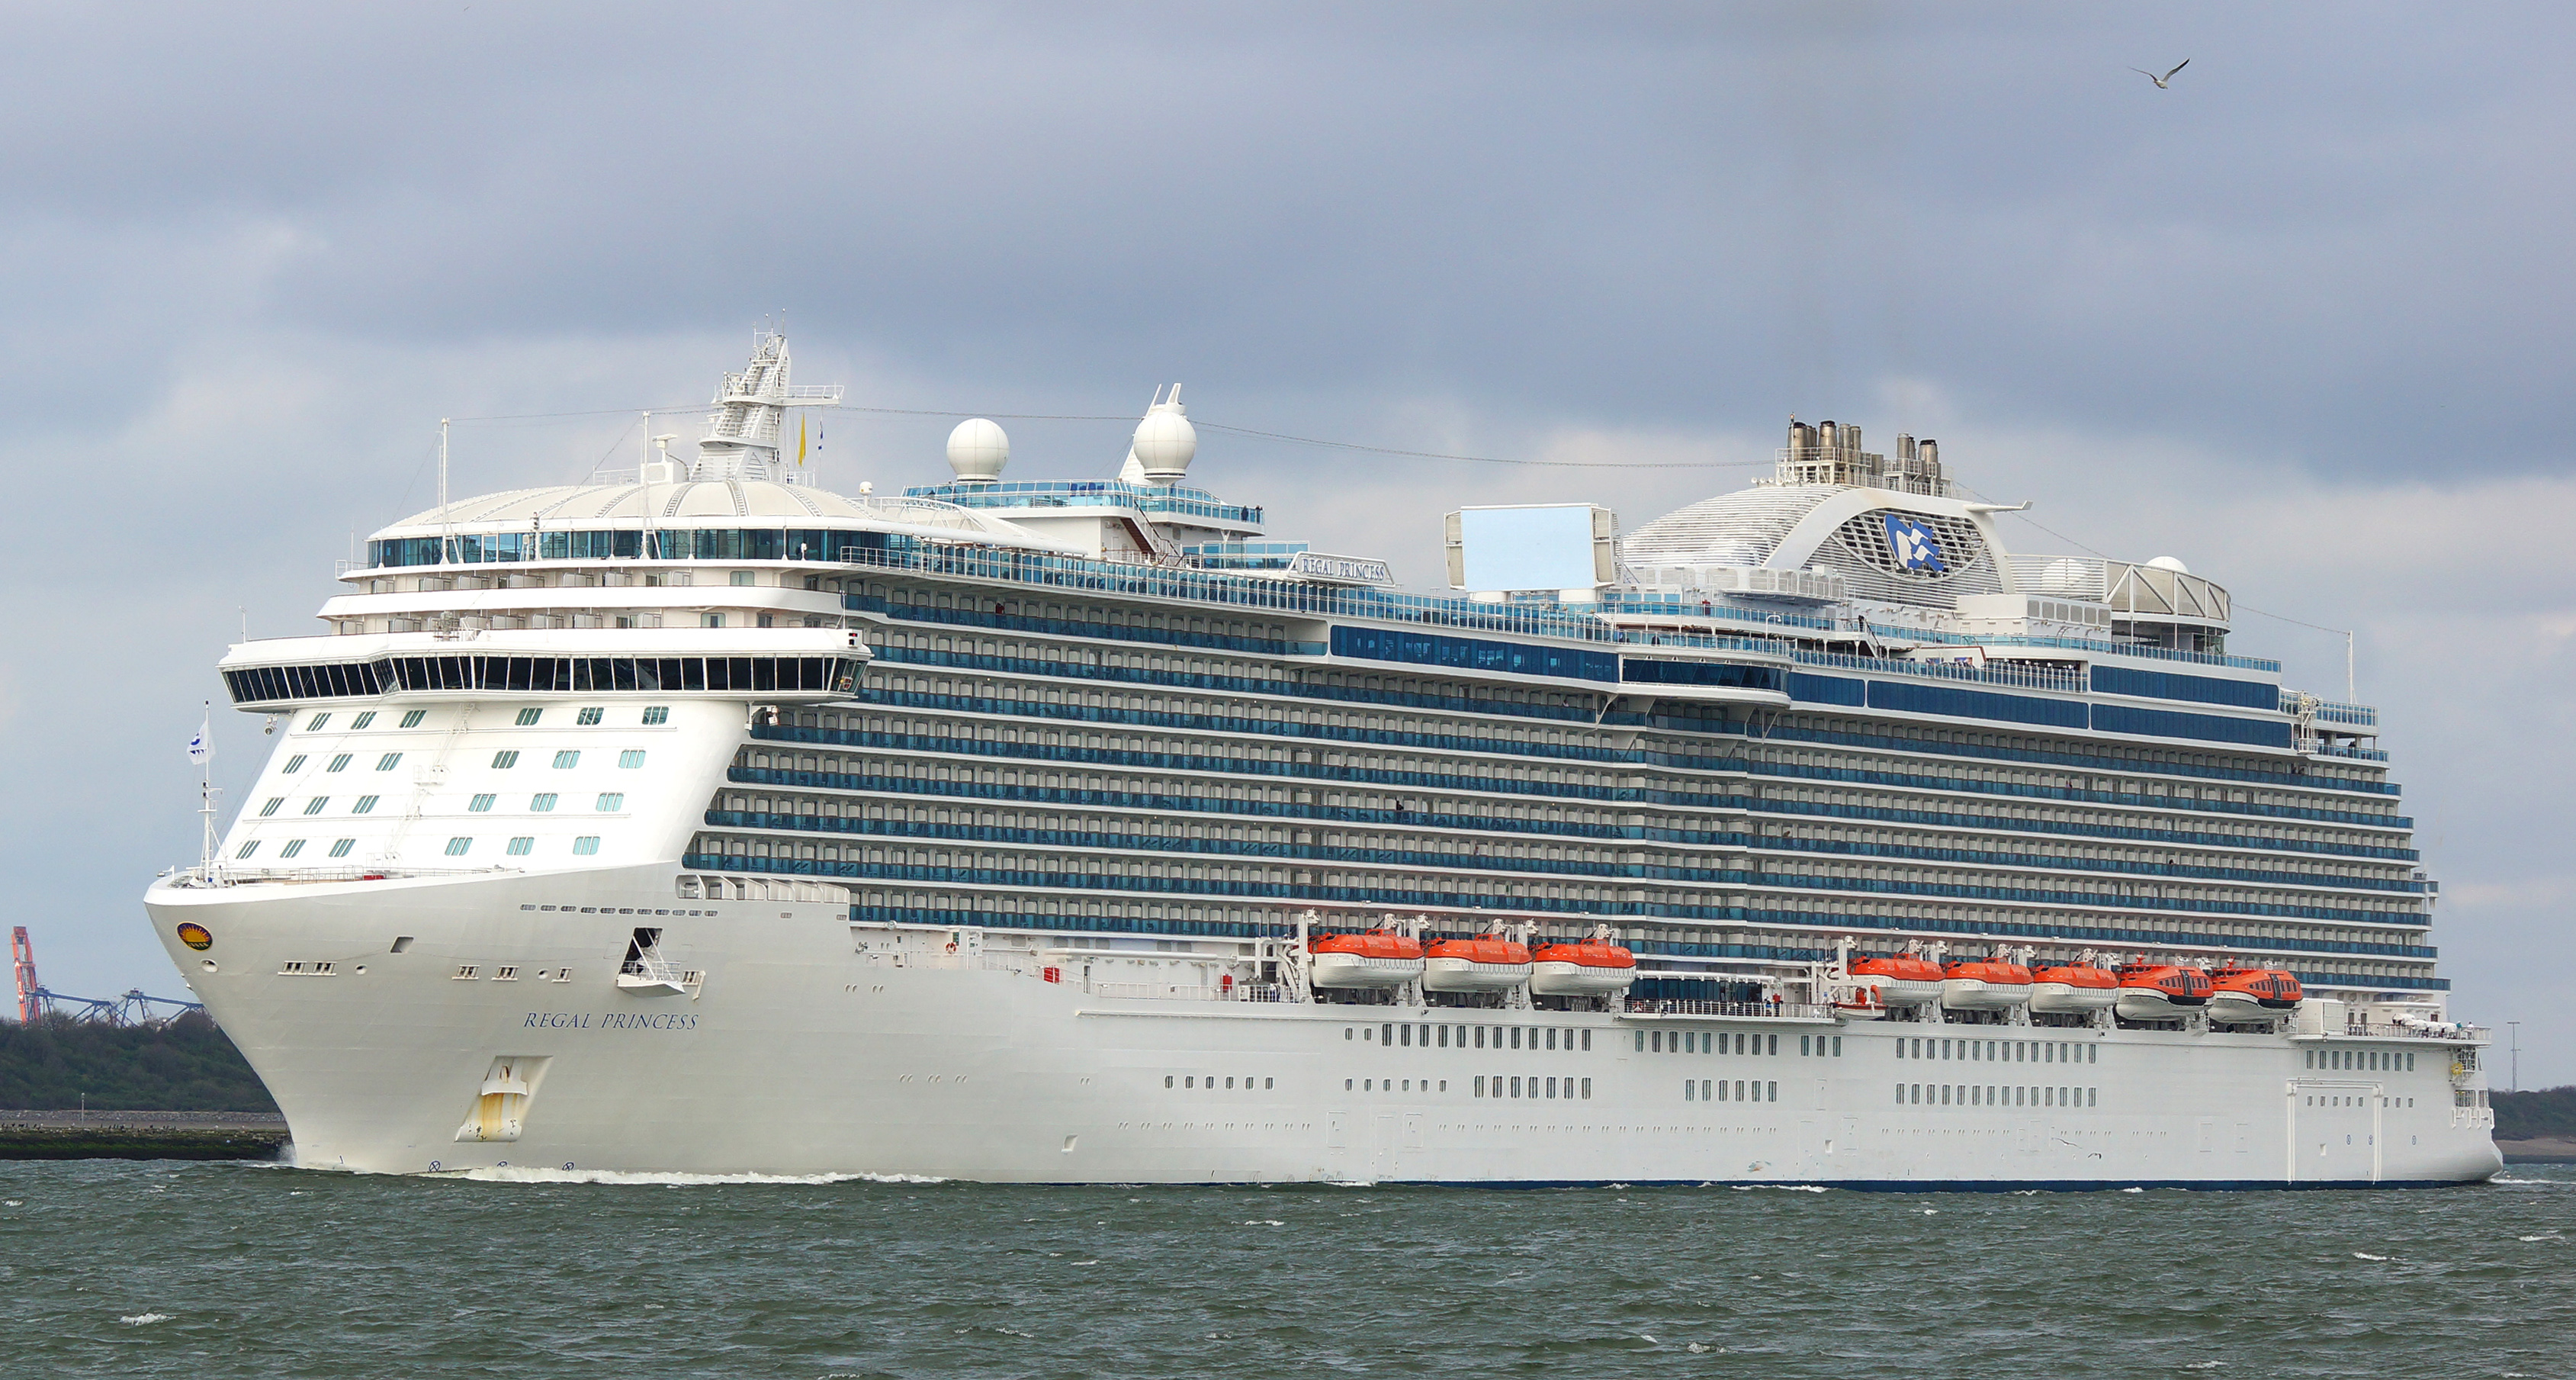 Cruiseschip-Regal-Princess-Foto-Kees-Torn-Port-of-Rotterdam-pb-30-4-2020